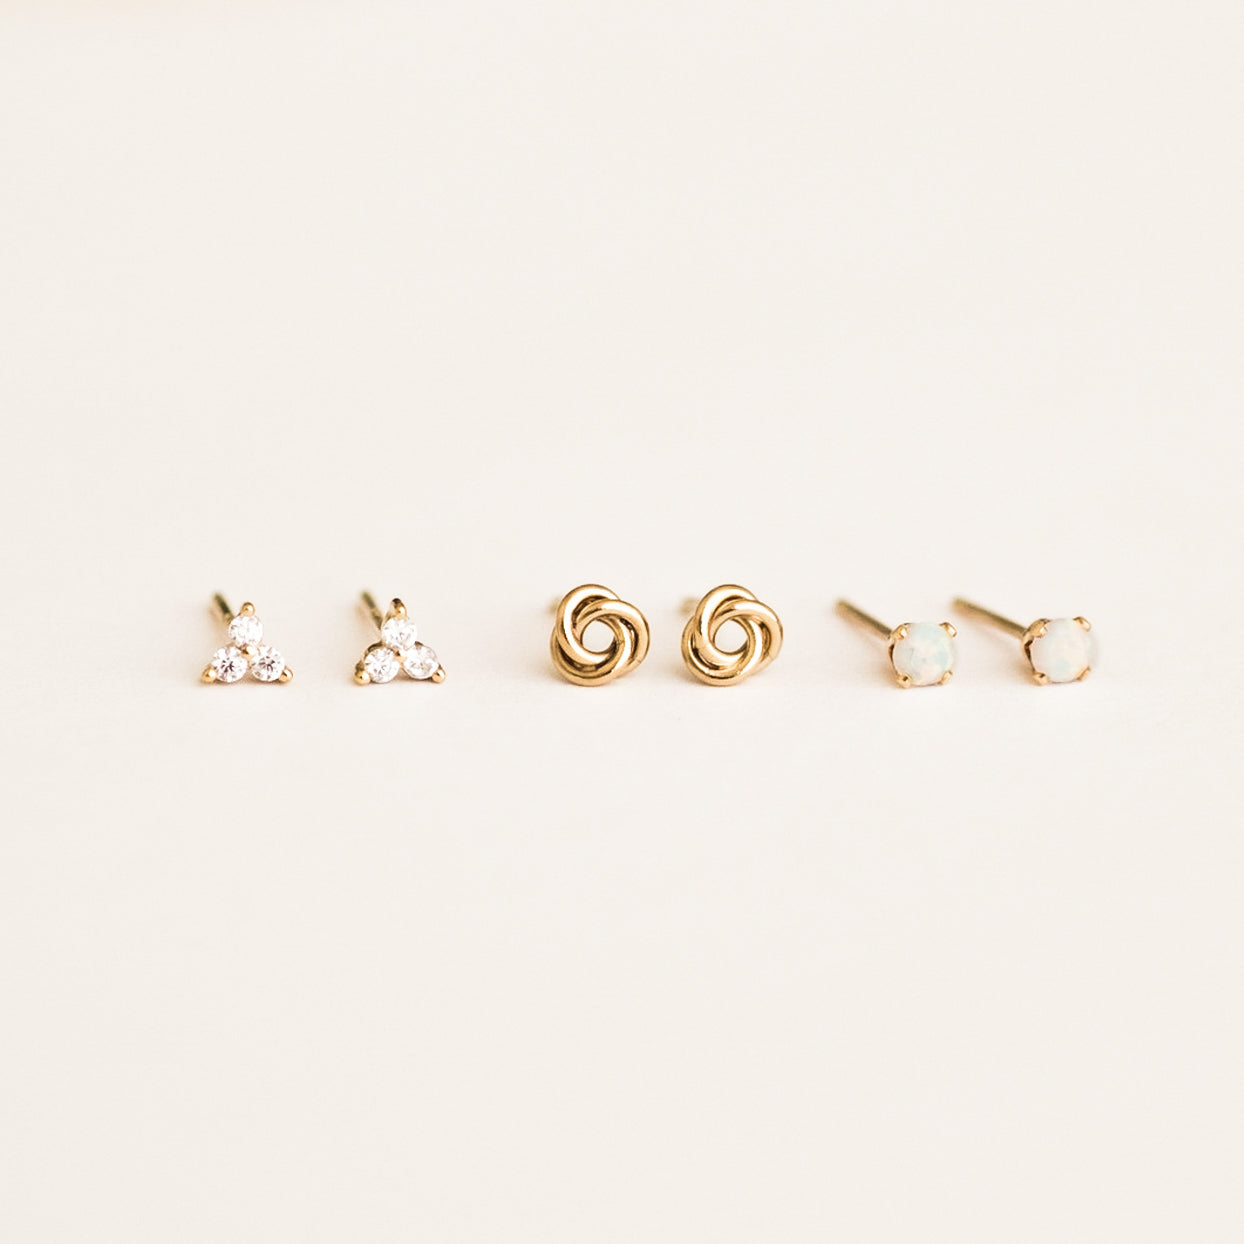 Tiny Opal Stud Earrings | Simple & Dainty Jewelry